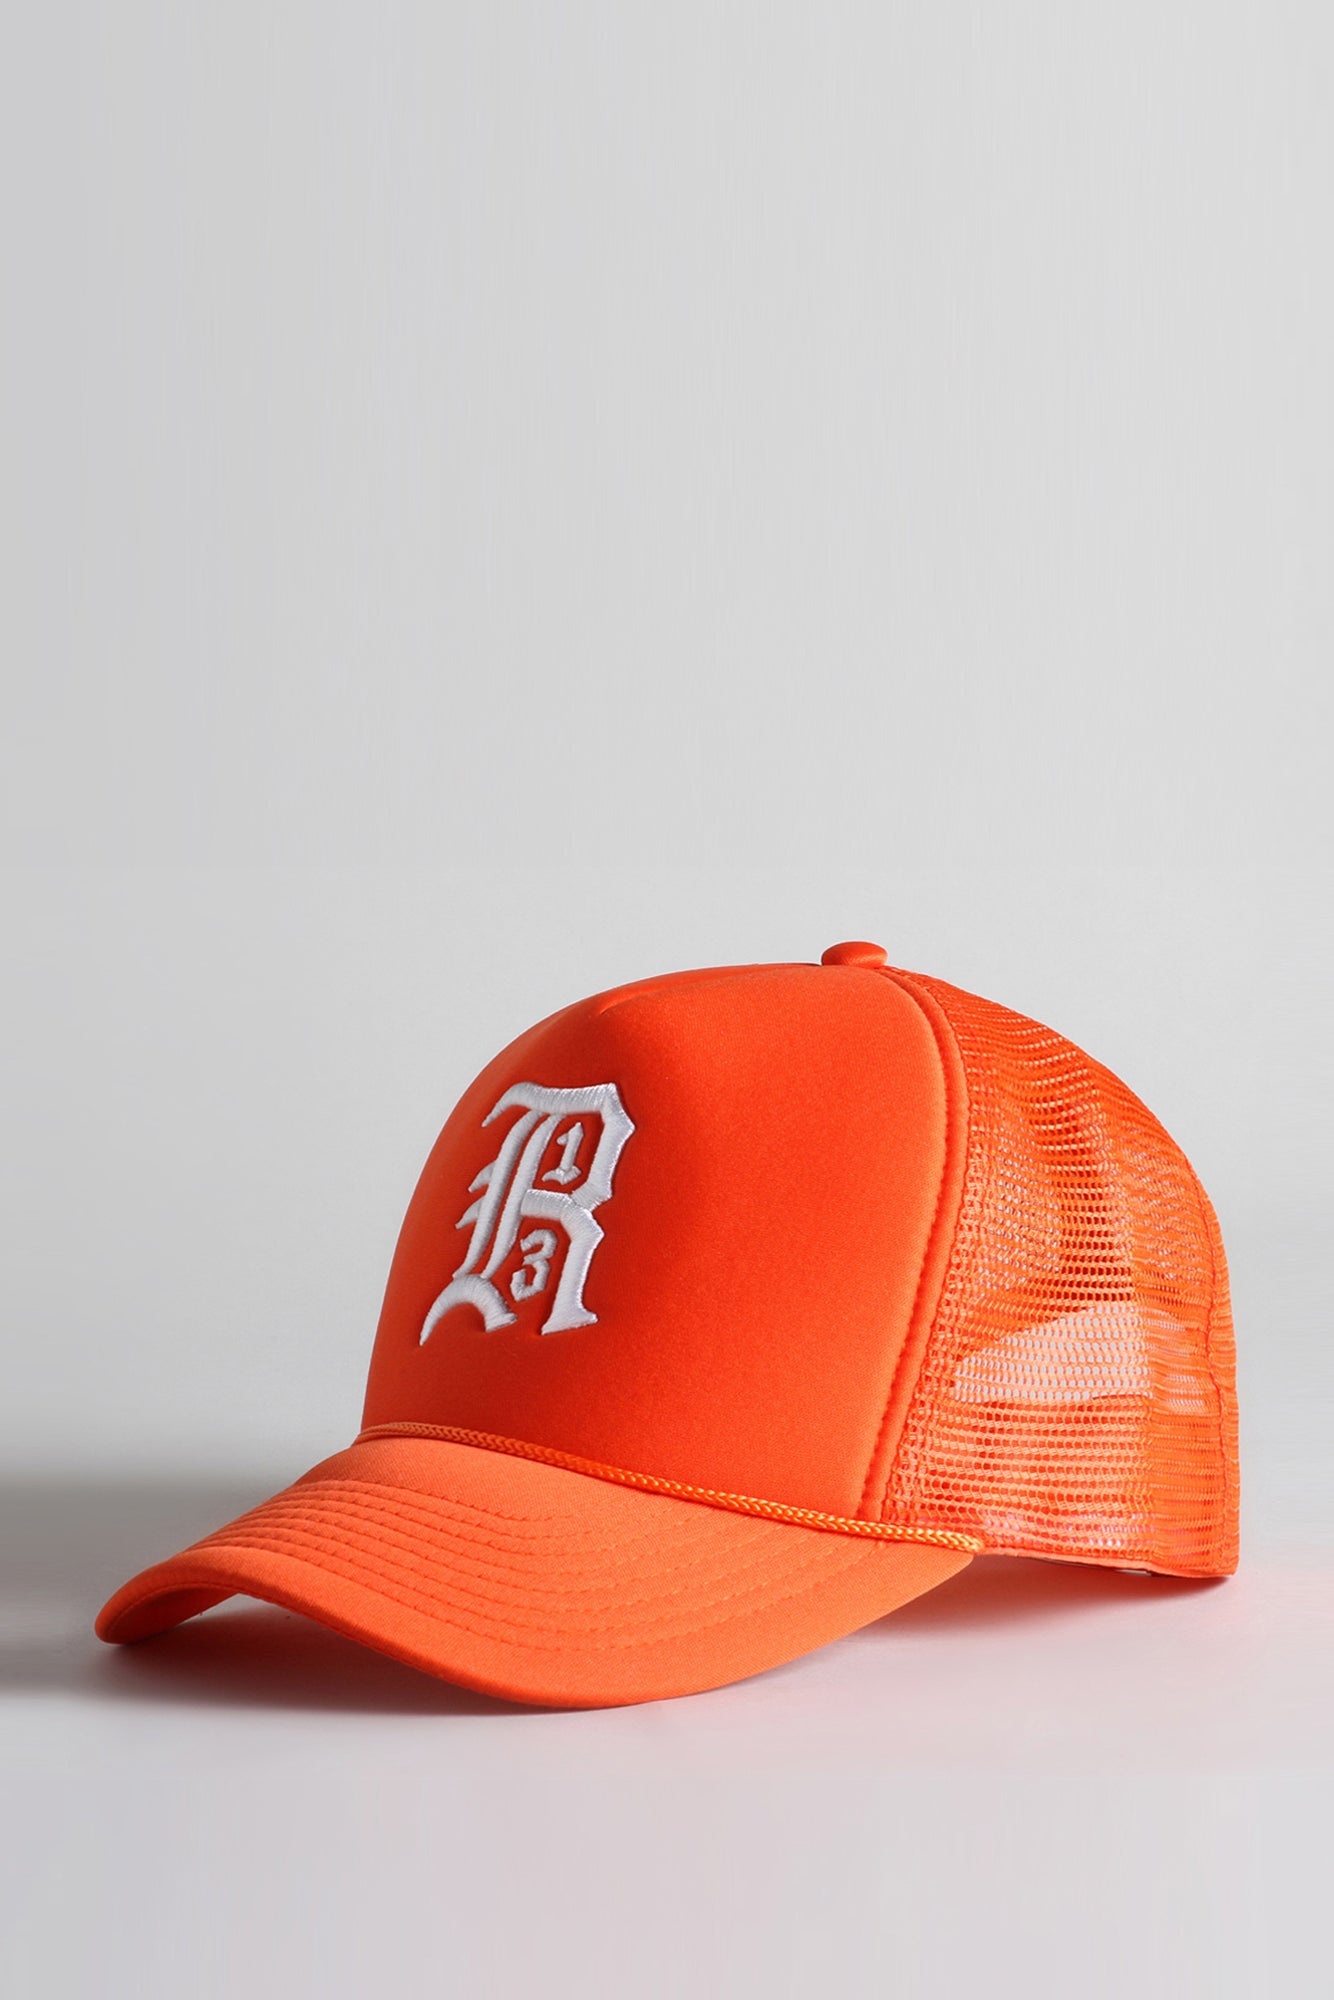 R13 R13 Trucker Hat - Orange | R13 Denim Official Site | REVERSIBLE